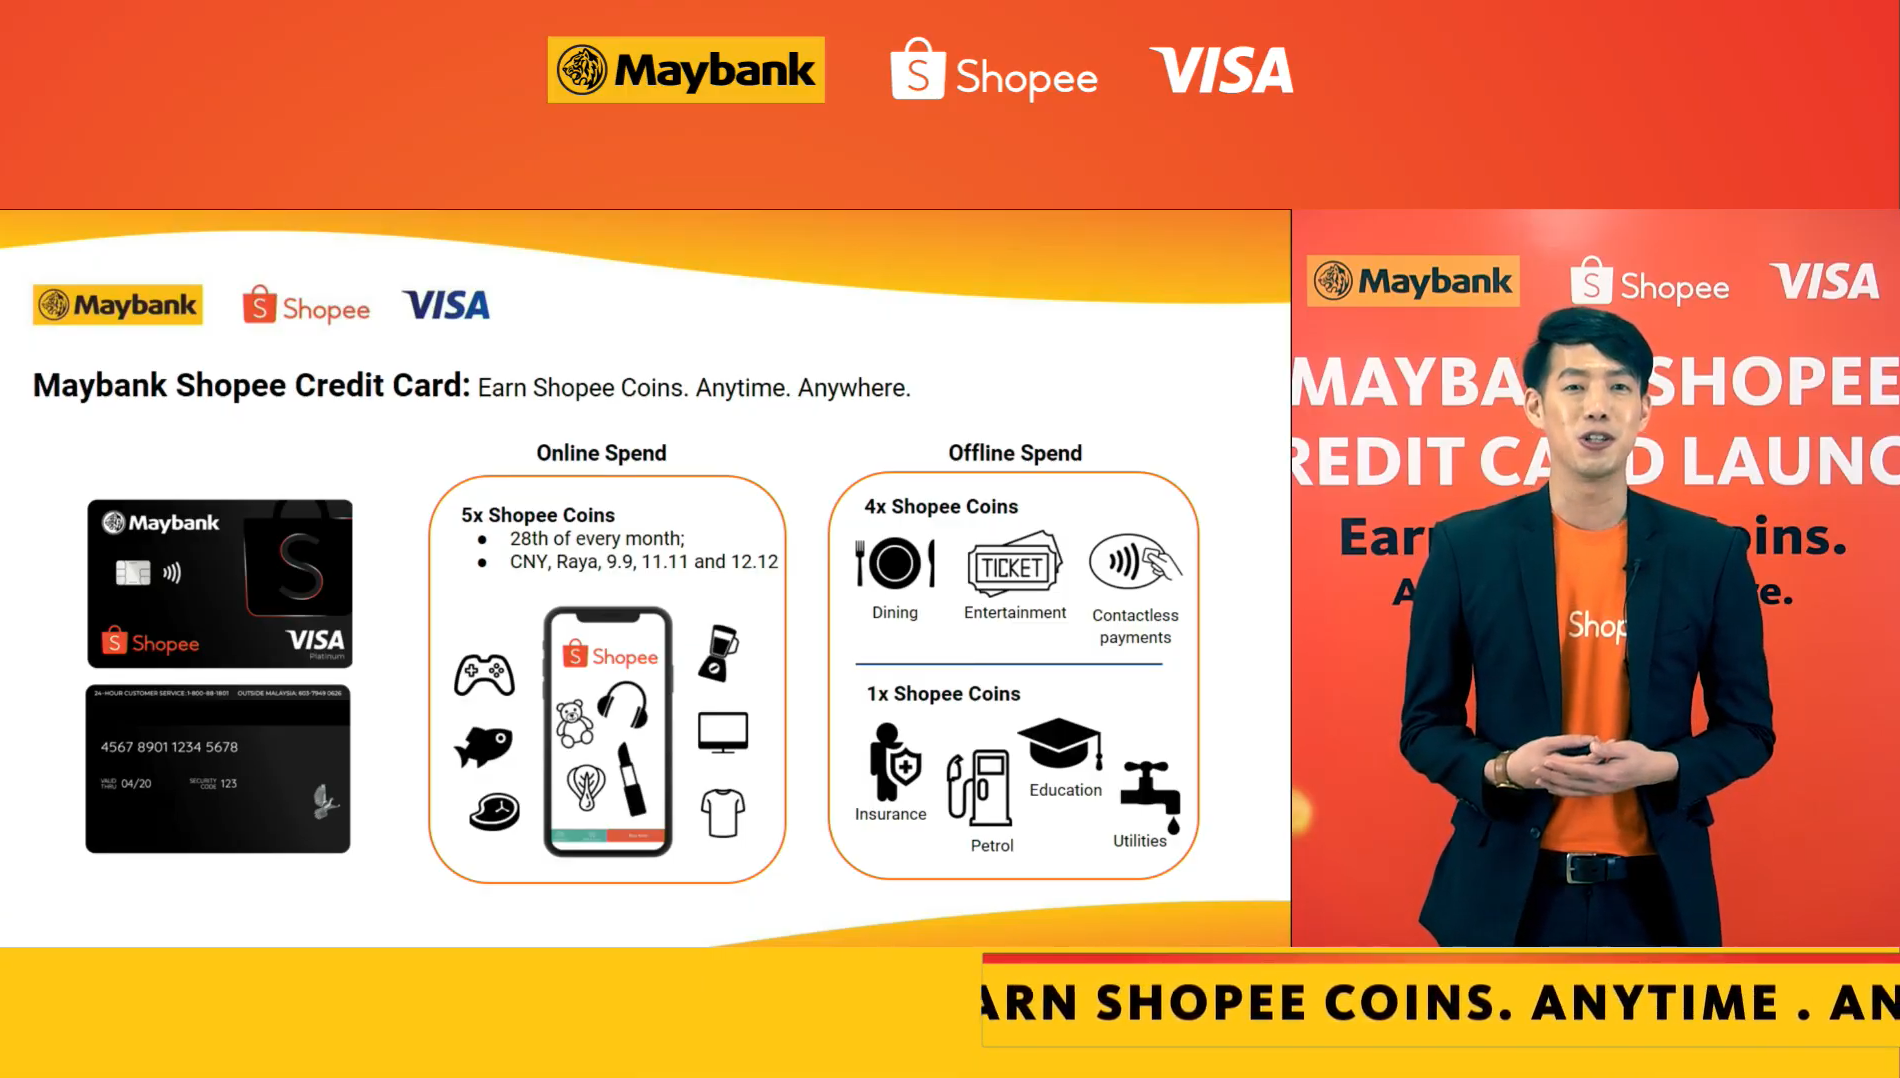 Shopee maybank credit card benefits